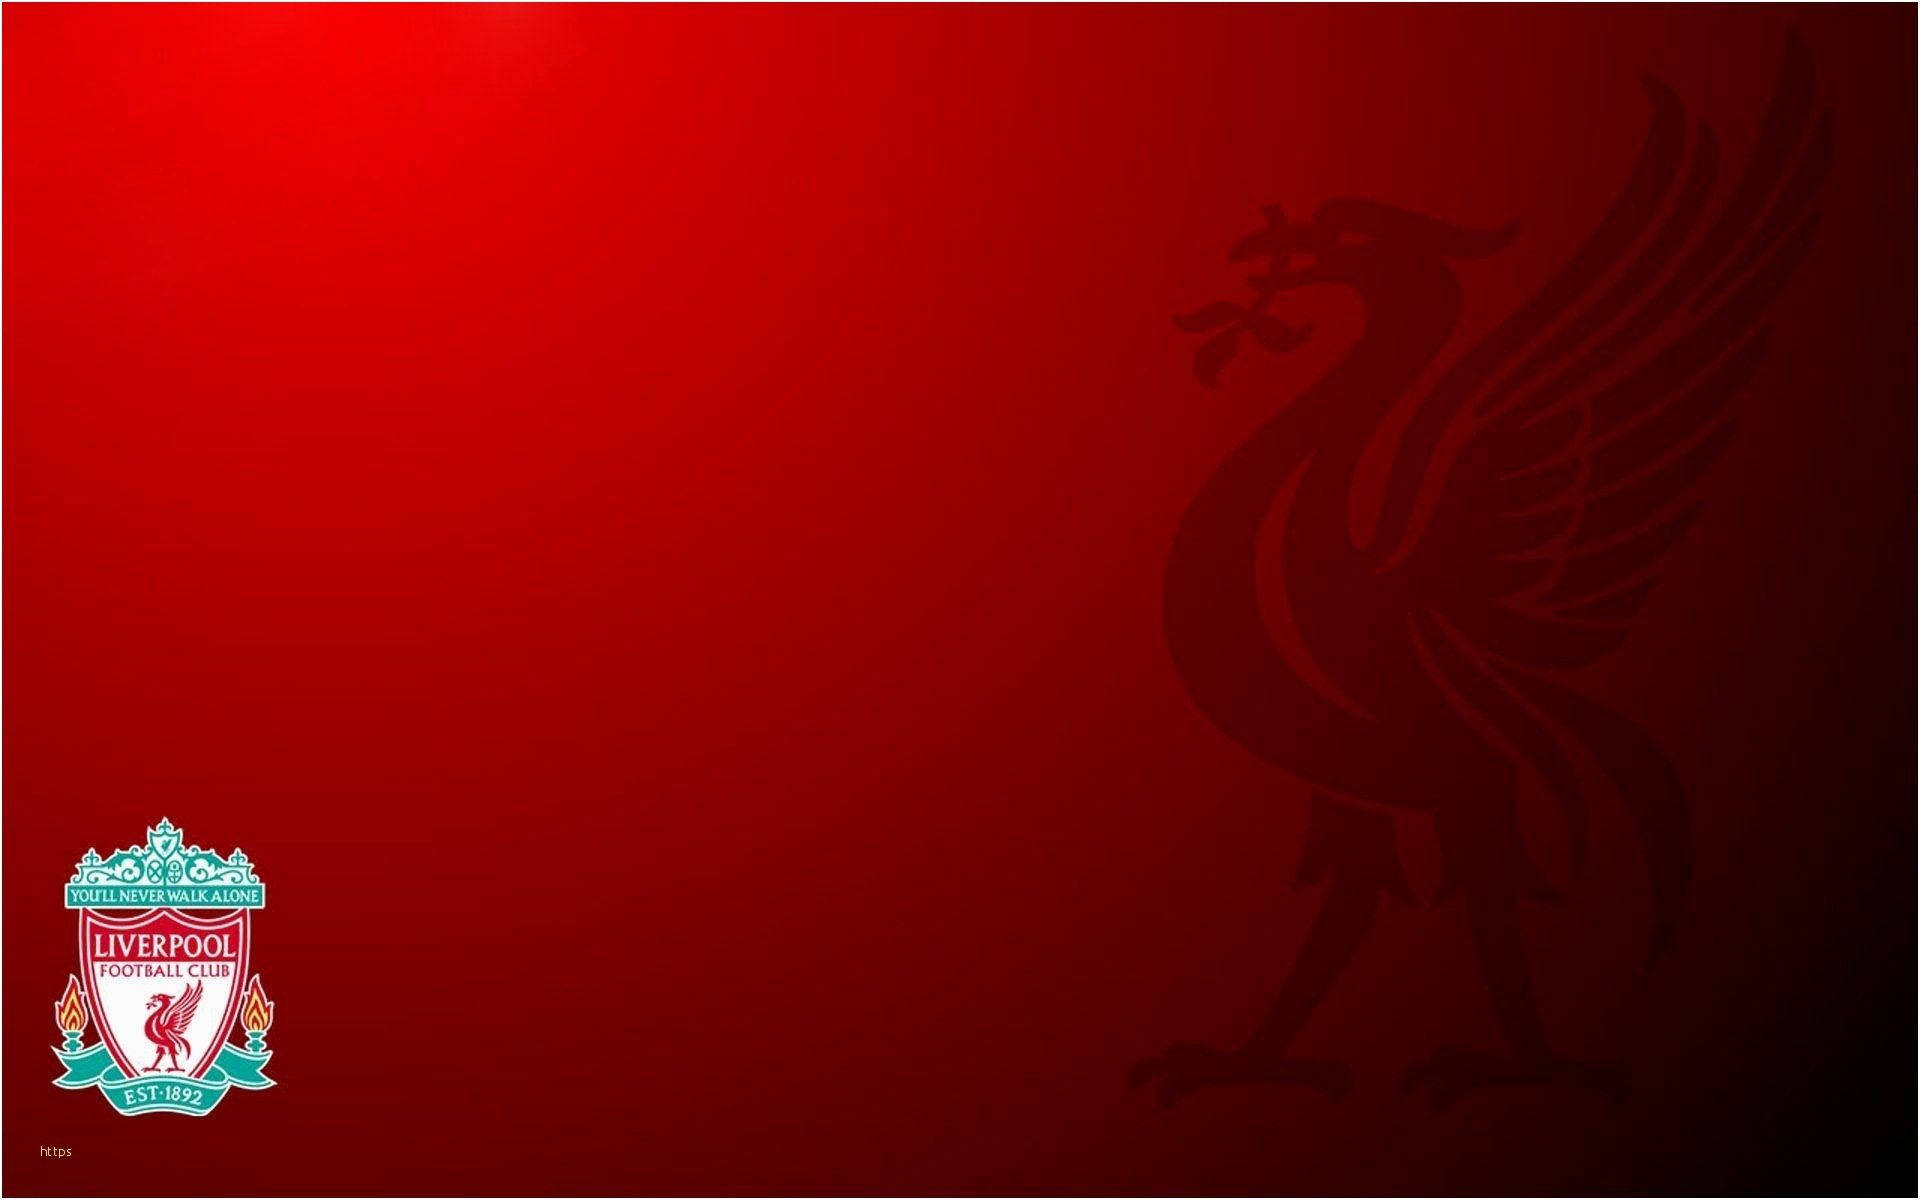 Liverpool Fc Red Liver Bird Background